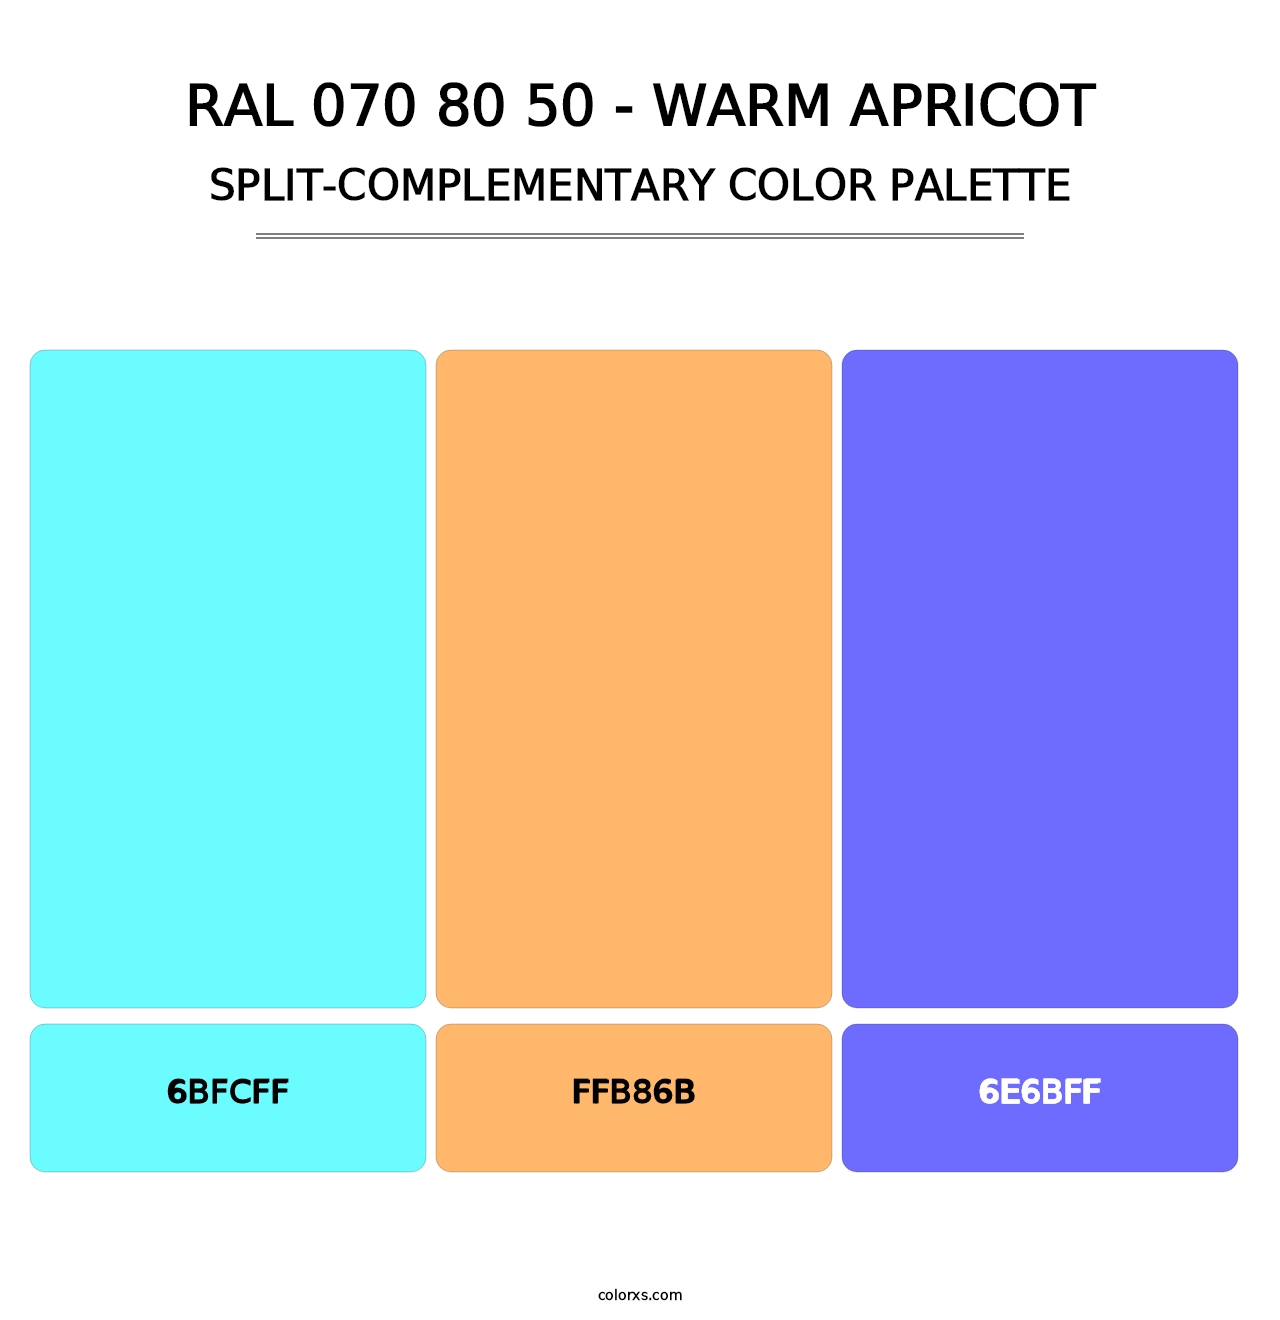 RAL 070 80 50 - Warm Apricot - Split-Complementary Color Palette